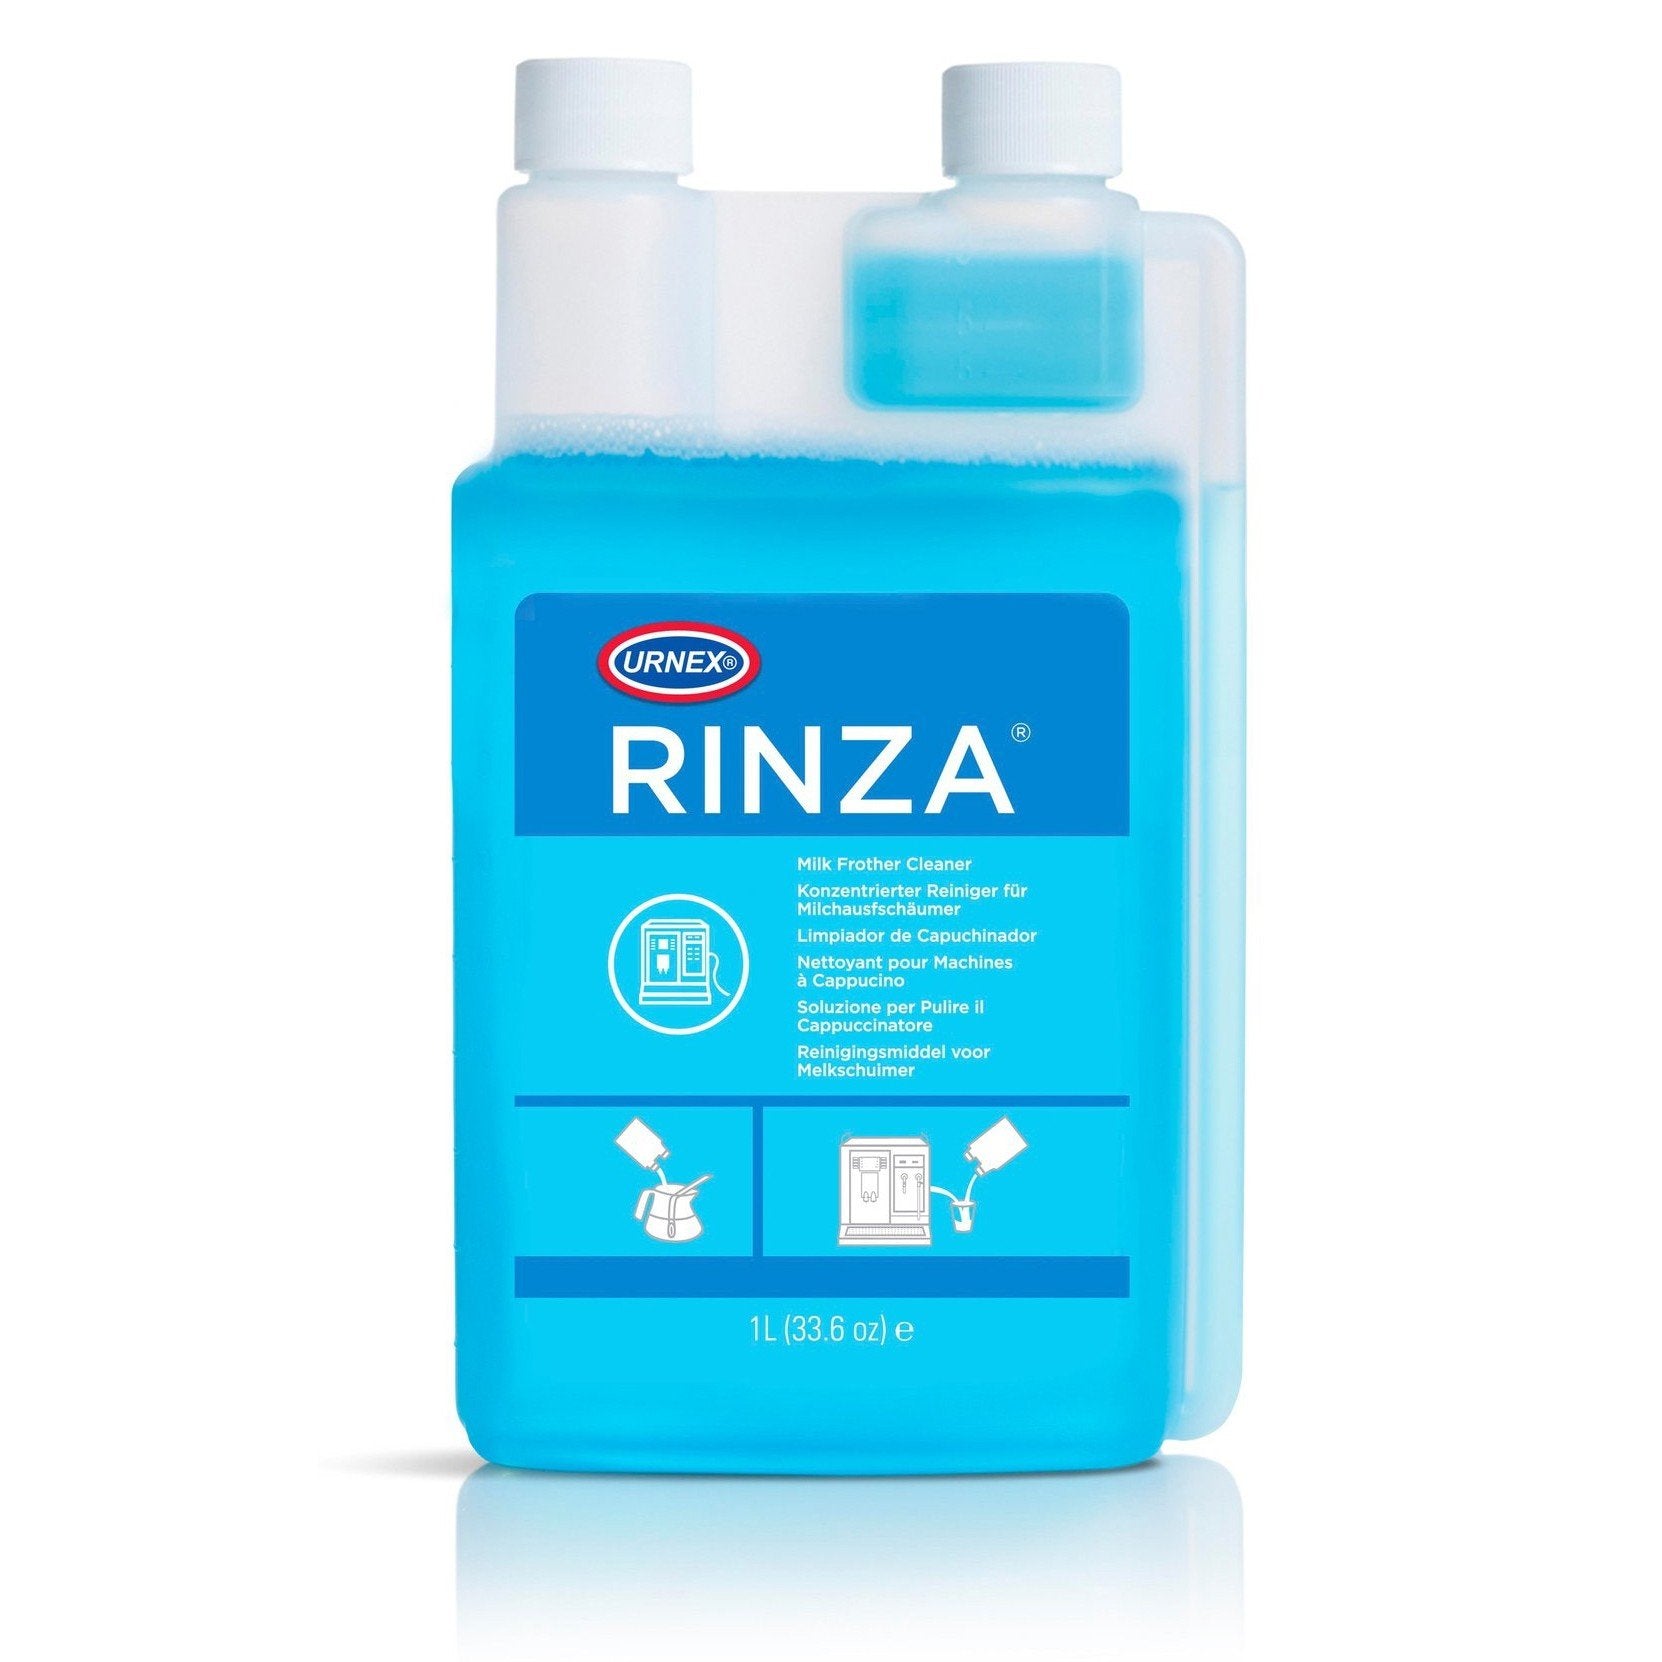 Urnex - Rinza milk frother cleaner